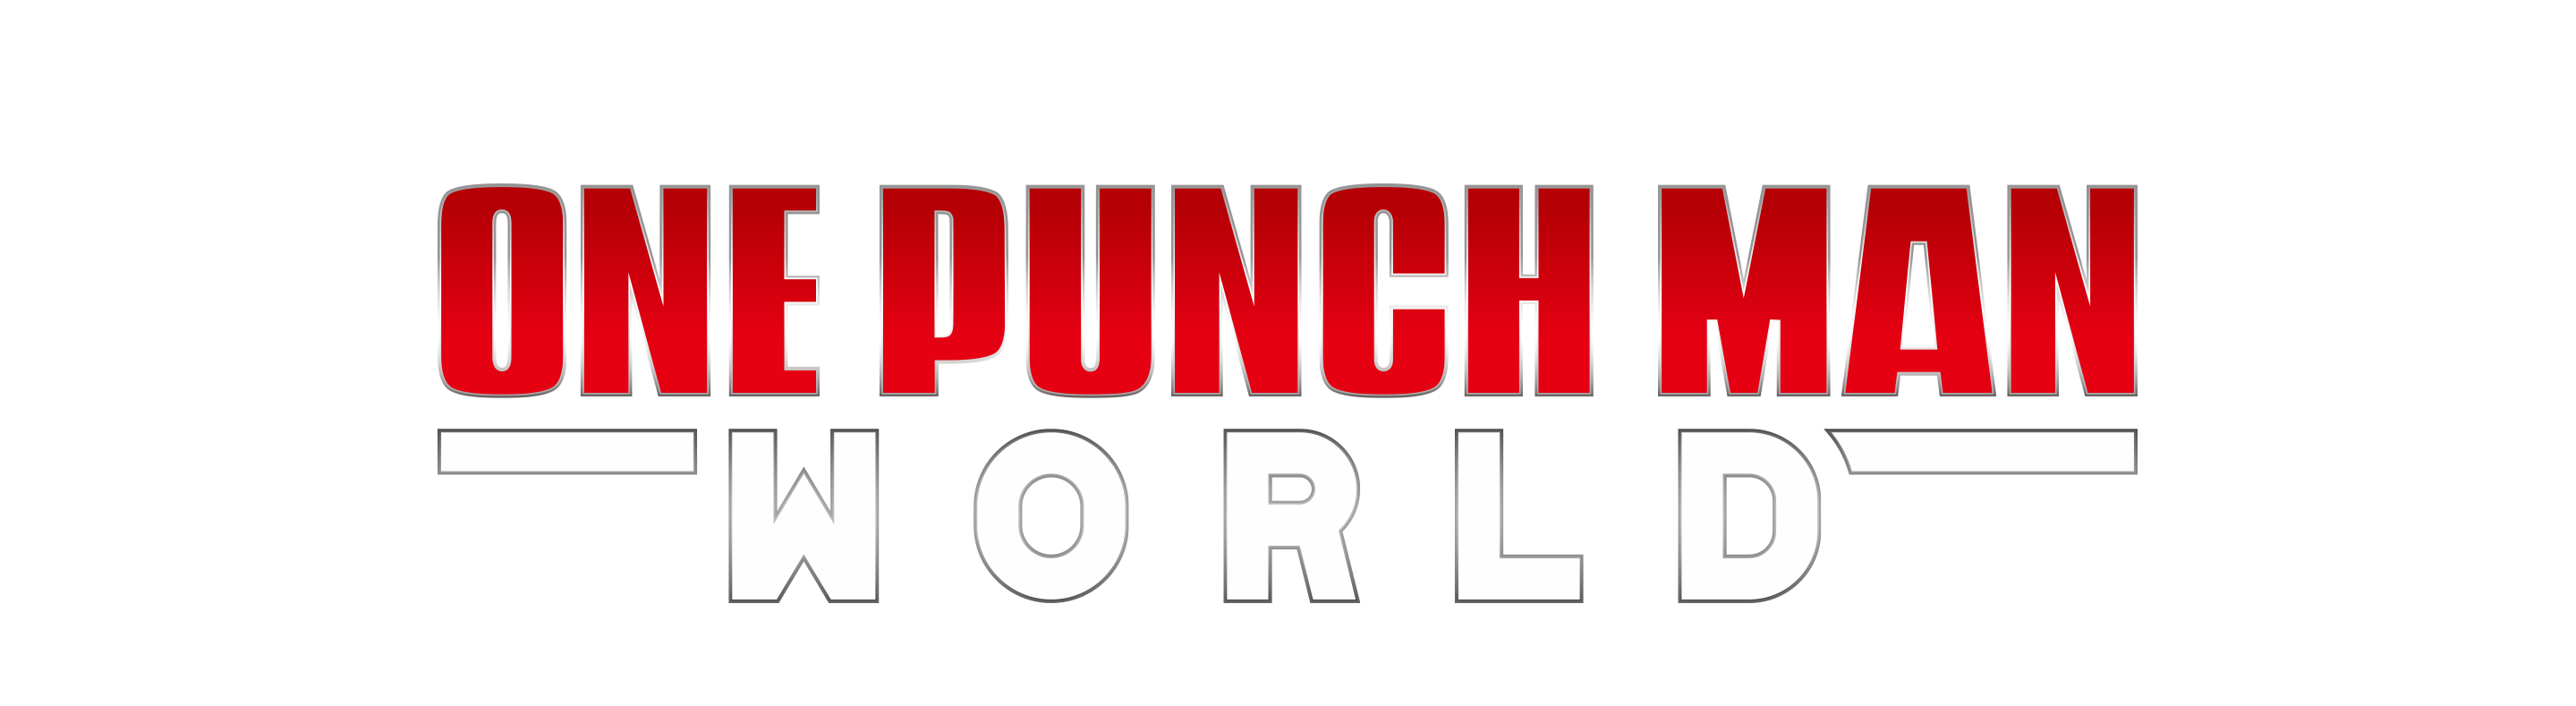 One Punch Man - Wanpanman: Road to Hero (Video 2015) - IMDb